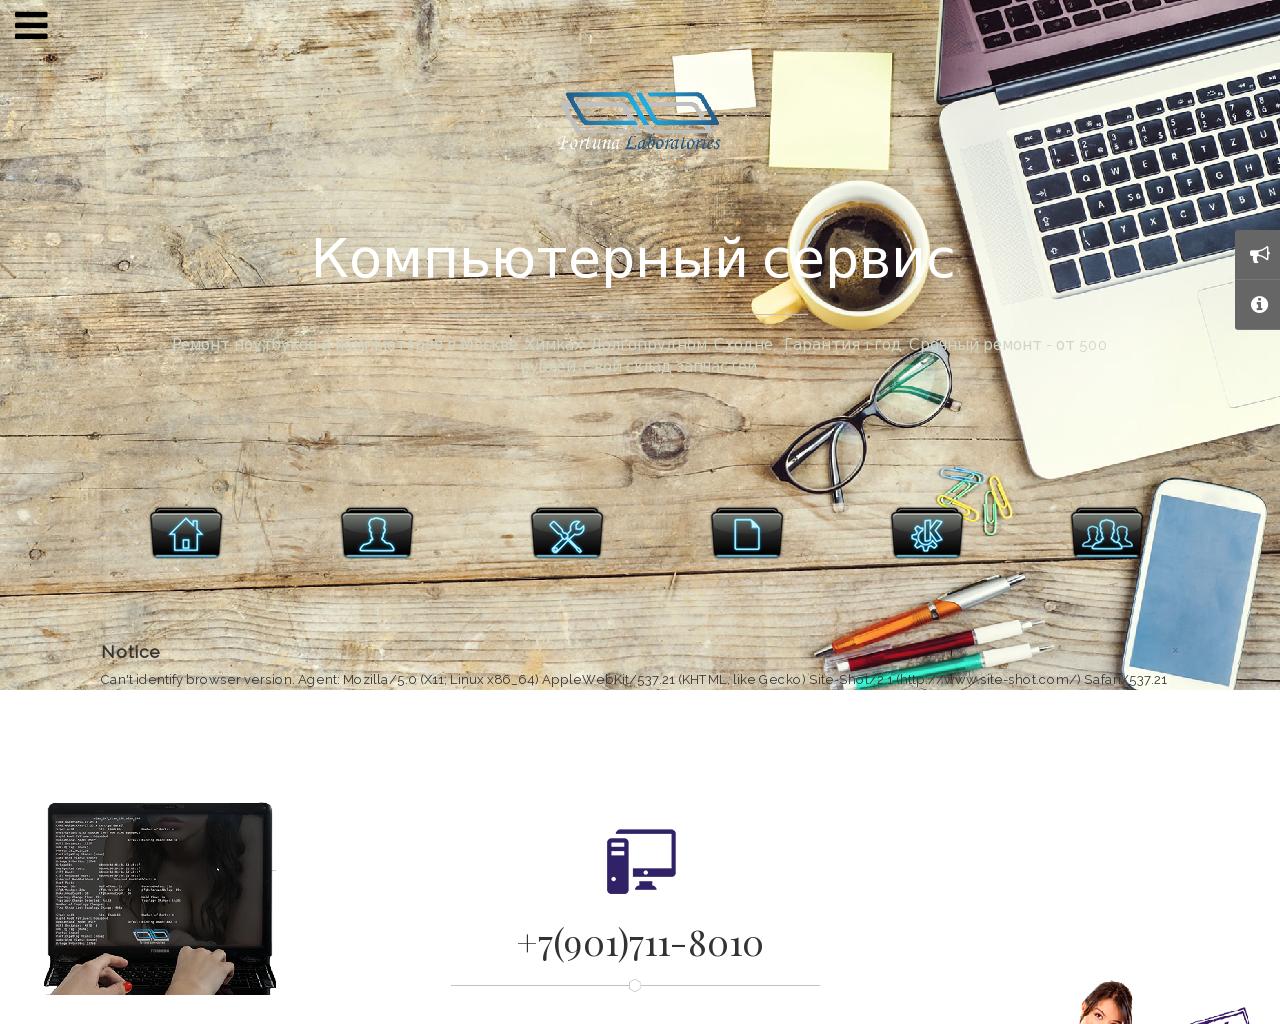 Изображение сайта fortuna-pc.ru в разрешении 1280x1024